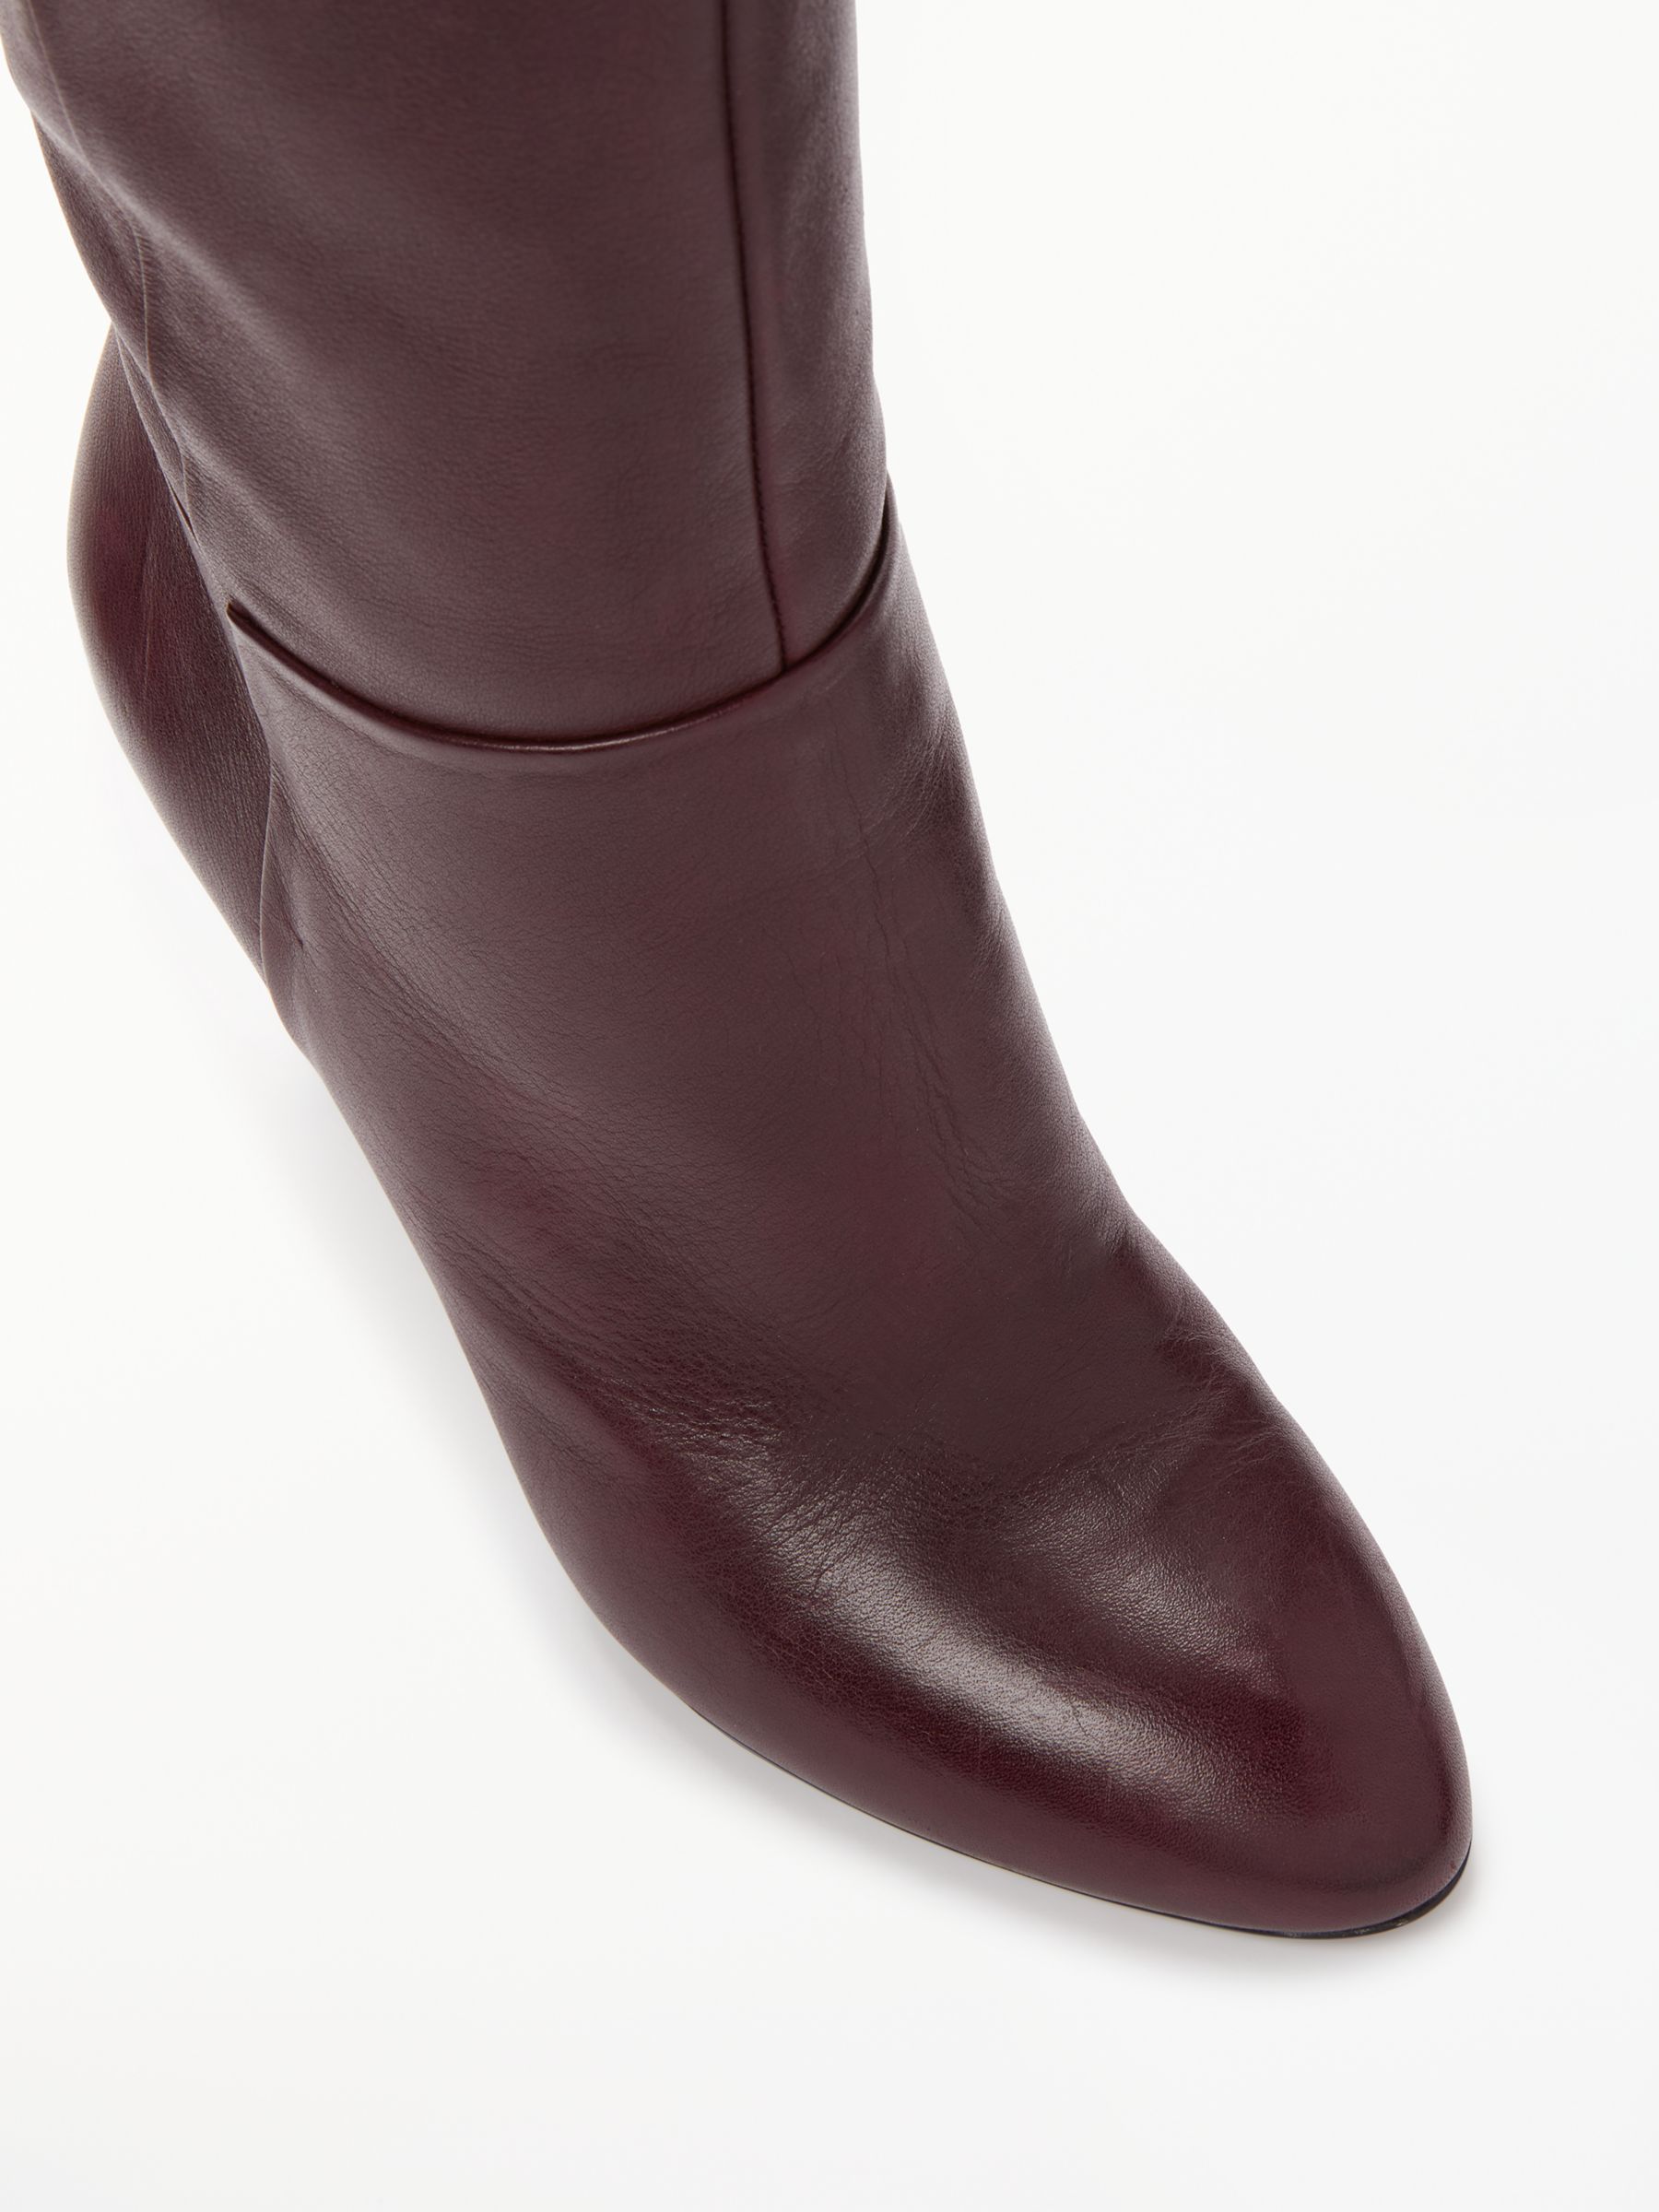 burgundy knee high boots uk